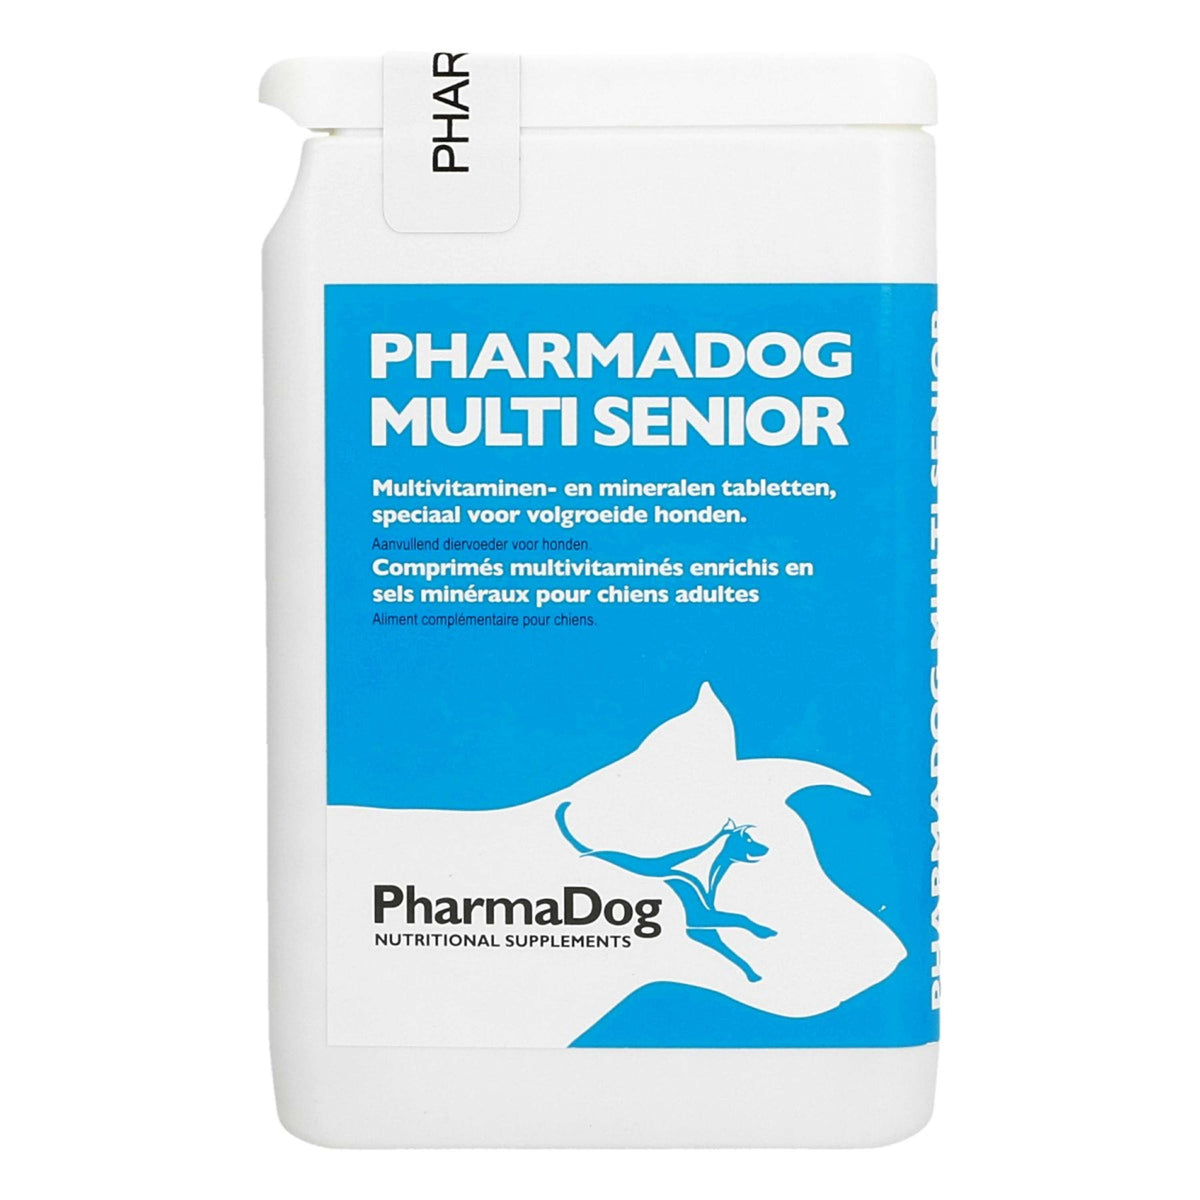 PharmaDog Multi Senior